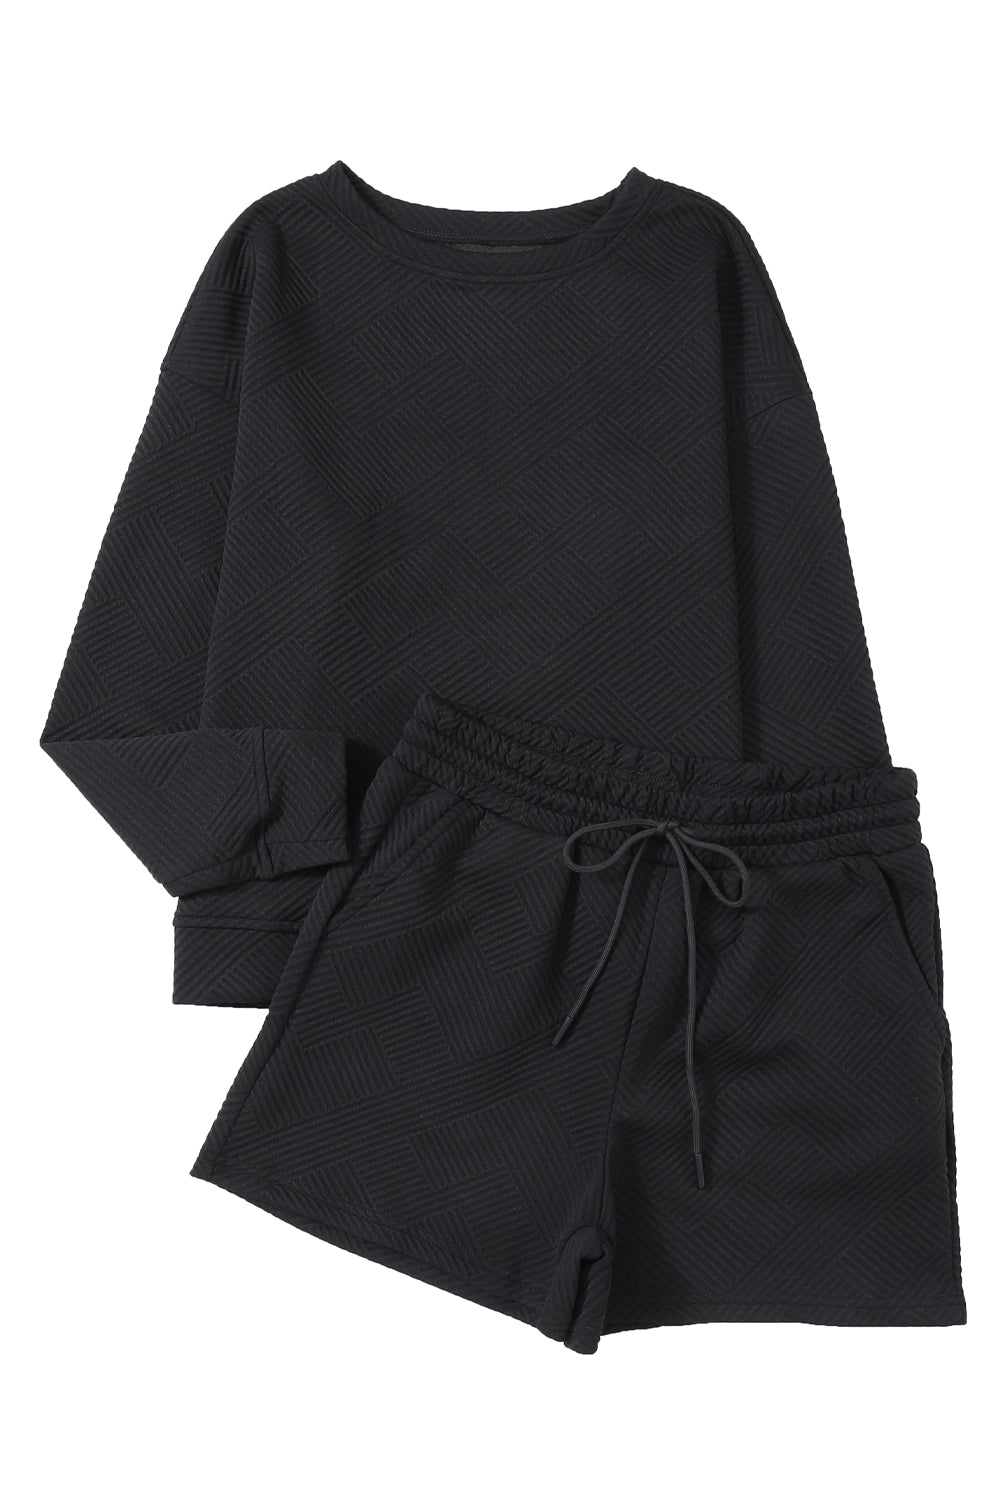 Navy Blue Textured Long Sleeve Top and Drawstring Shorts Set